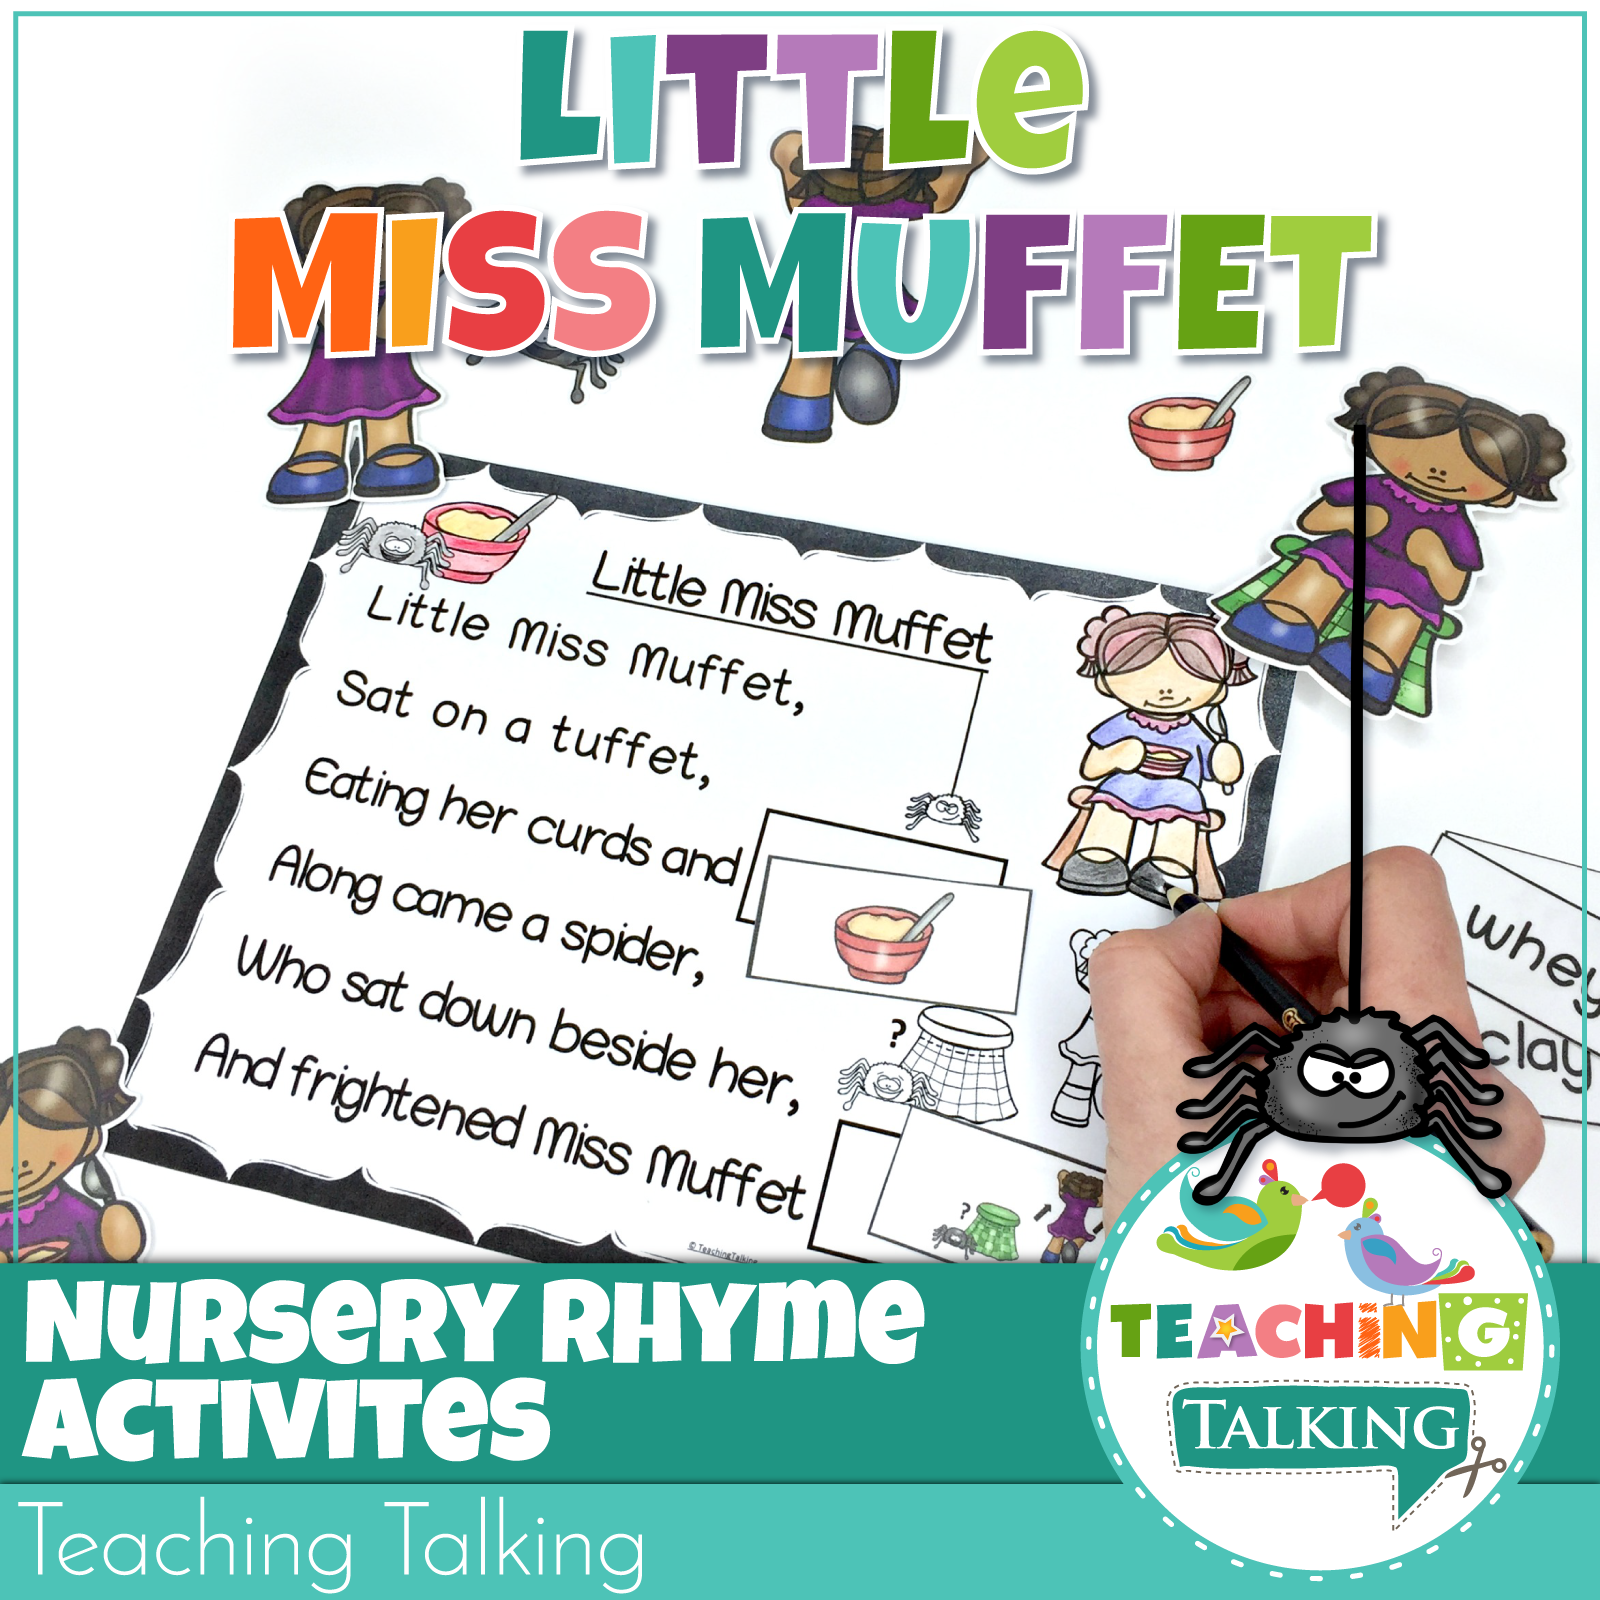 Teaching Talking Printable Nursery Rhyme Activities for Little Miss Muffett